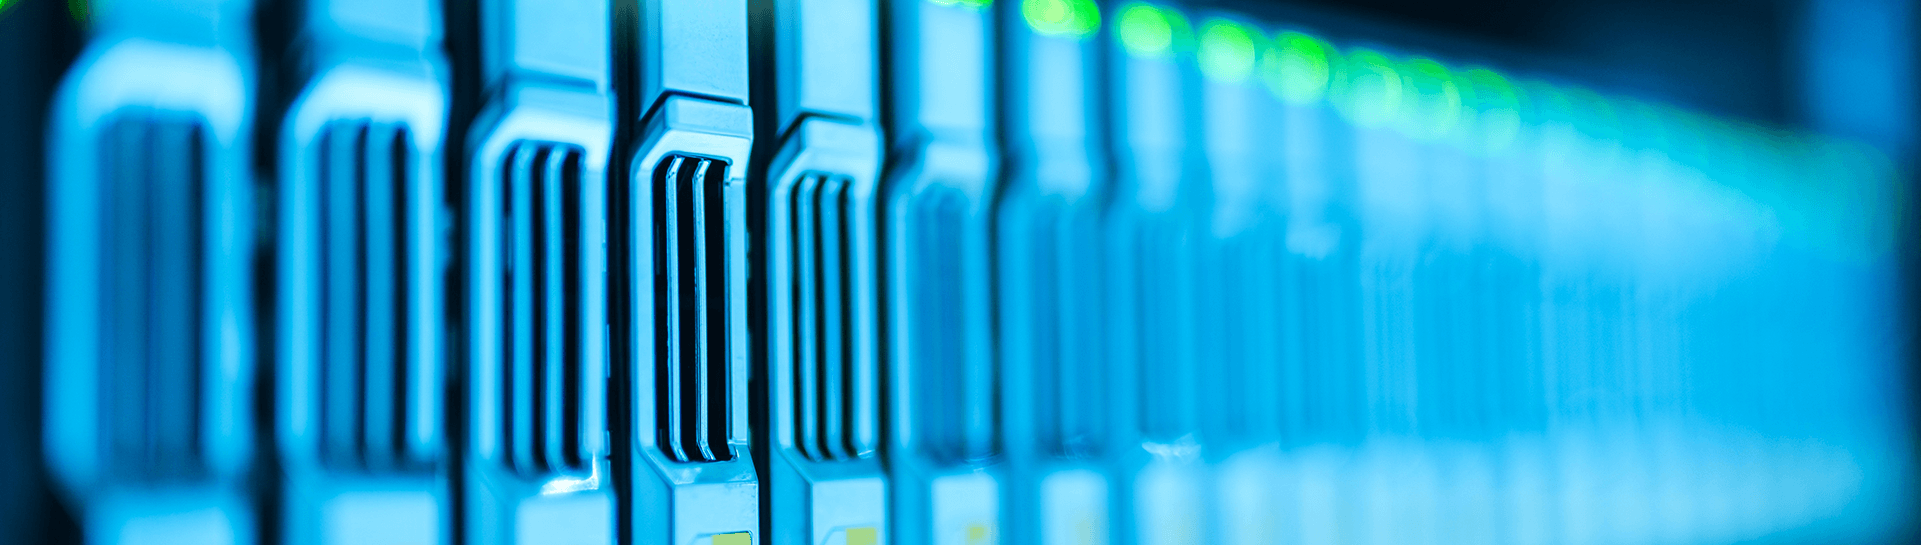 A close up of computer servers